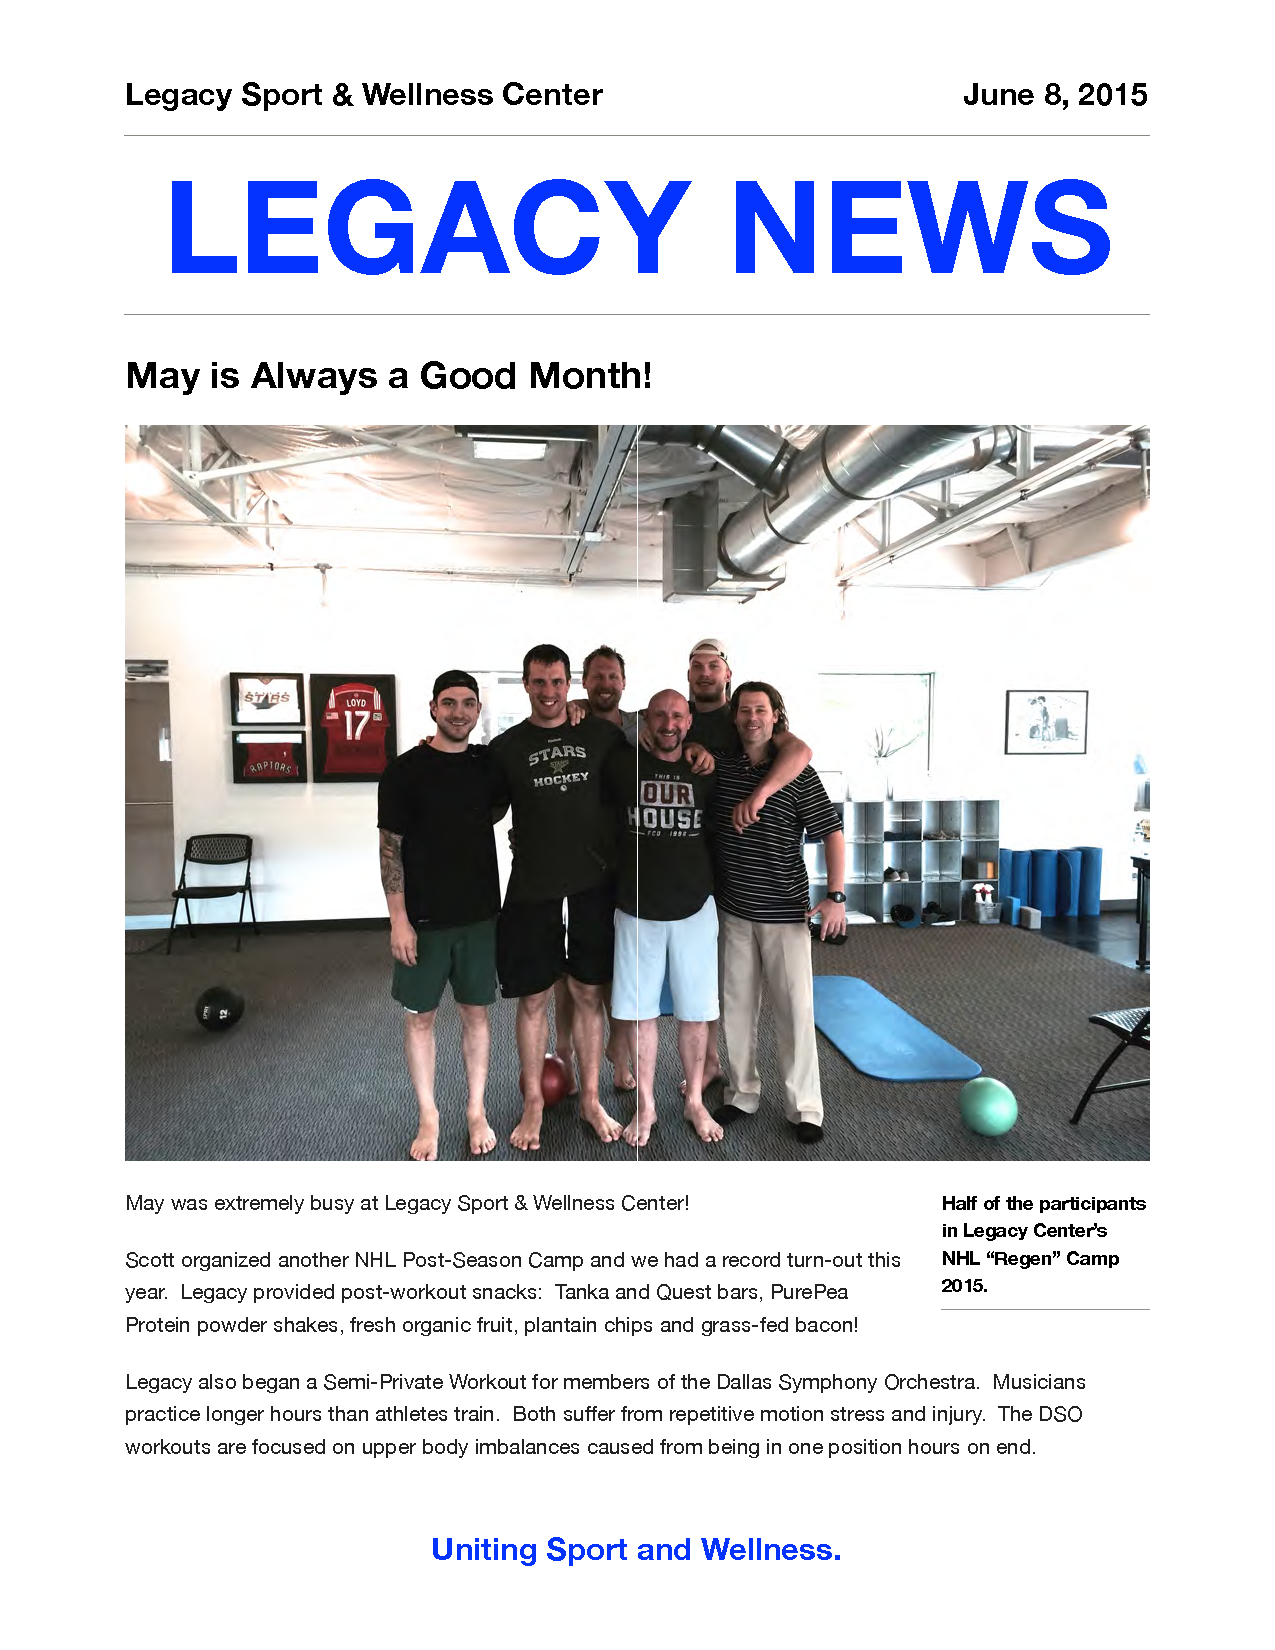 Legacy News 6/8/2015